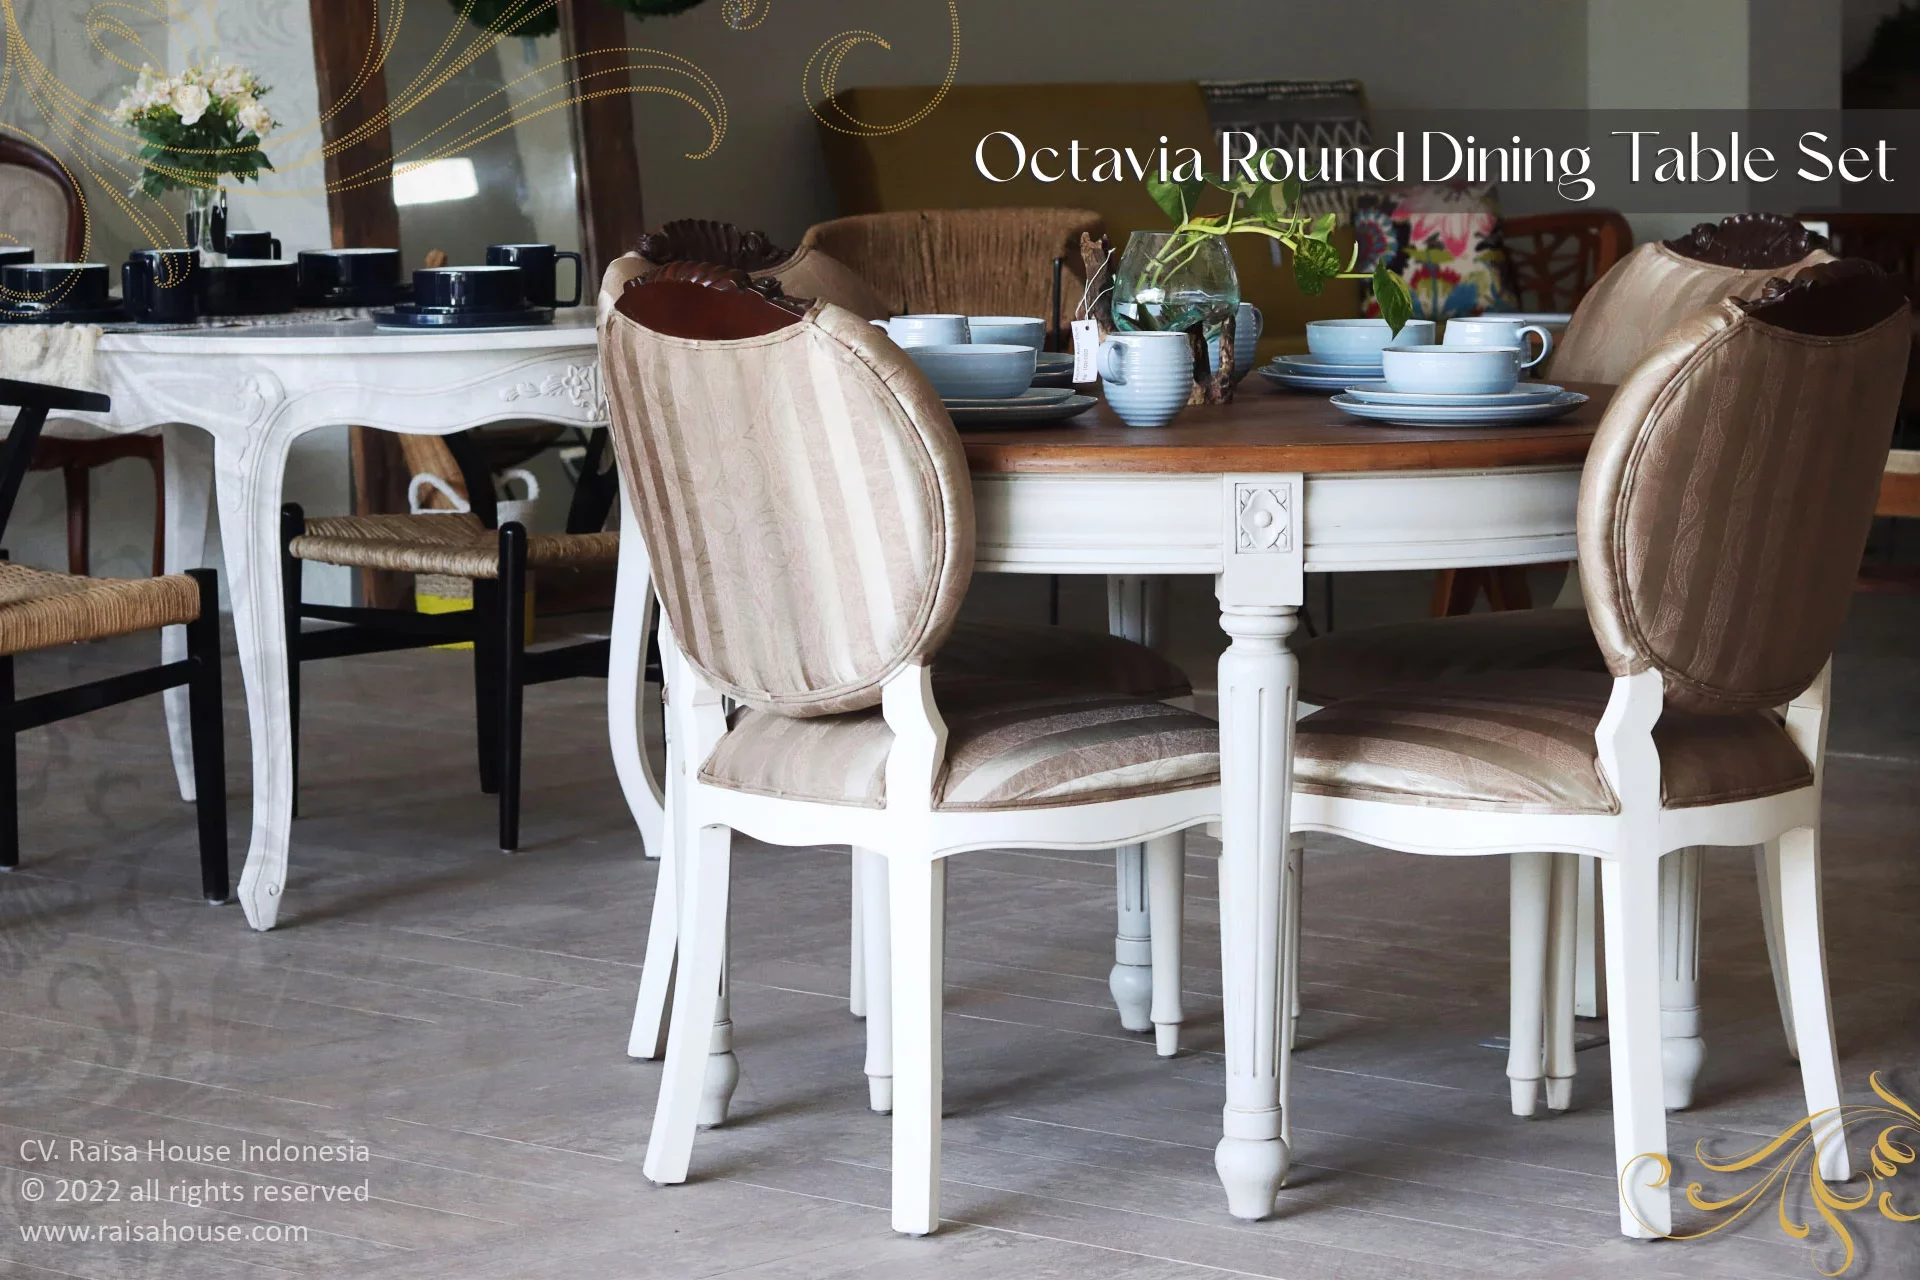 Ocatavia round dining table set 4 chair